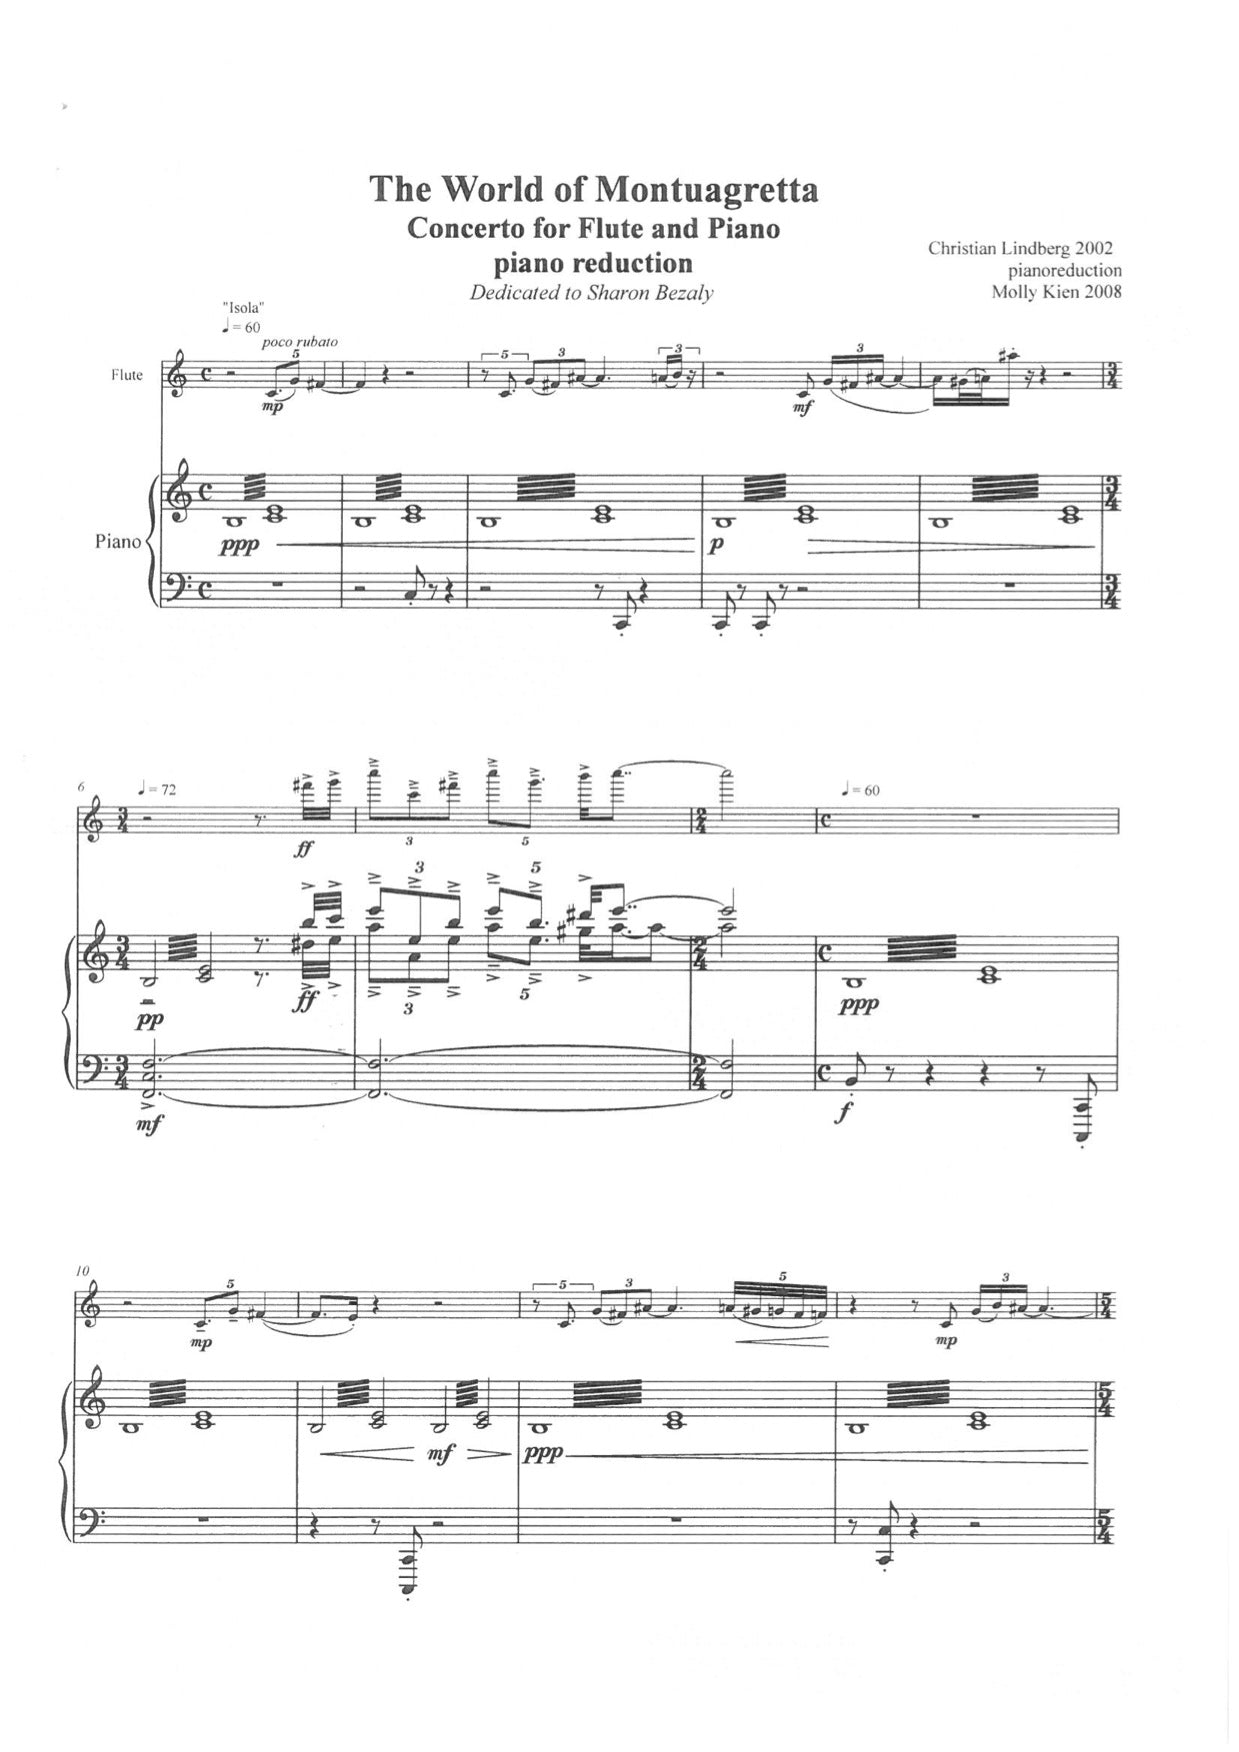 Christian Lindberg - The World of Montuagretta Flute & Piano